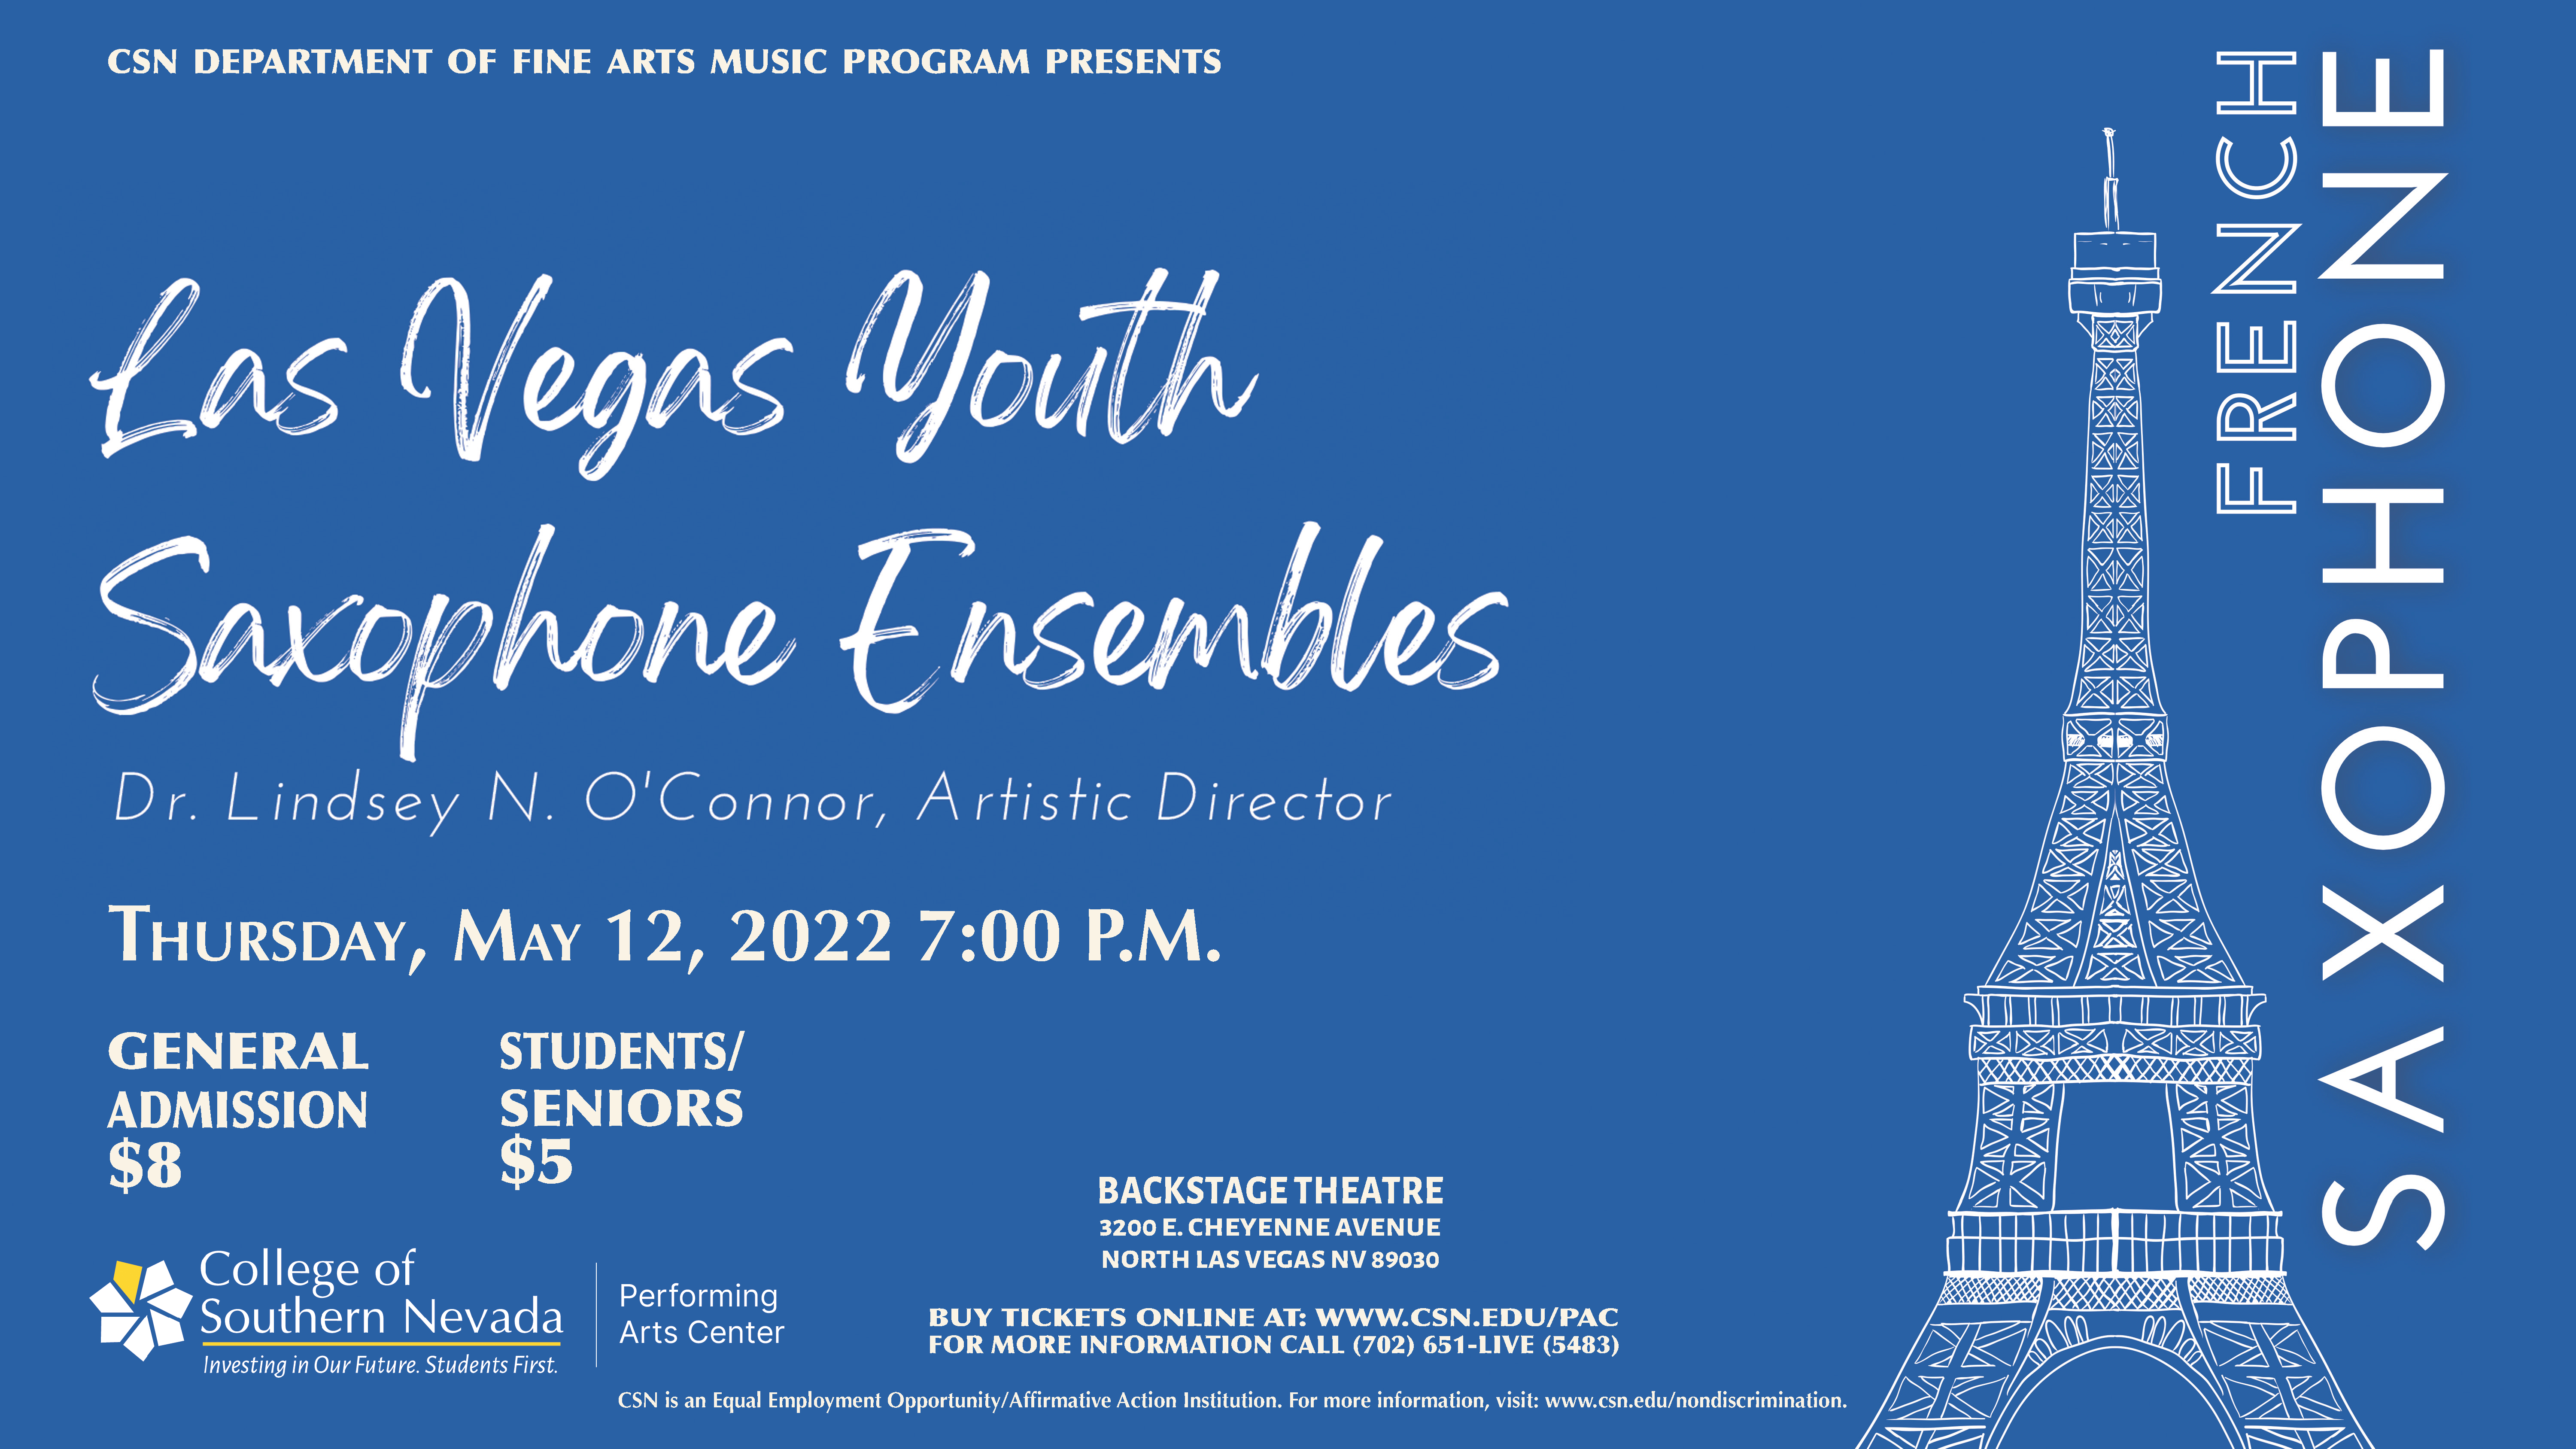 Las Vegas Youth Saxophone Ensembles May 12, 2022 event flyer 